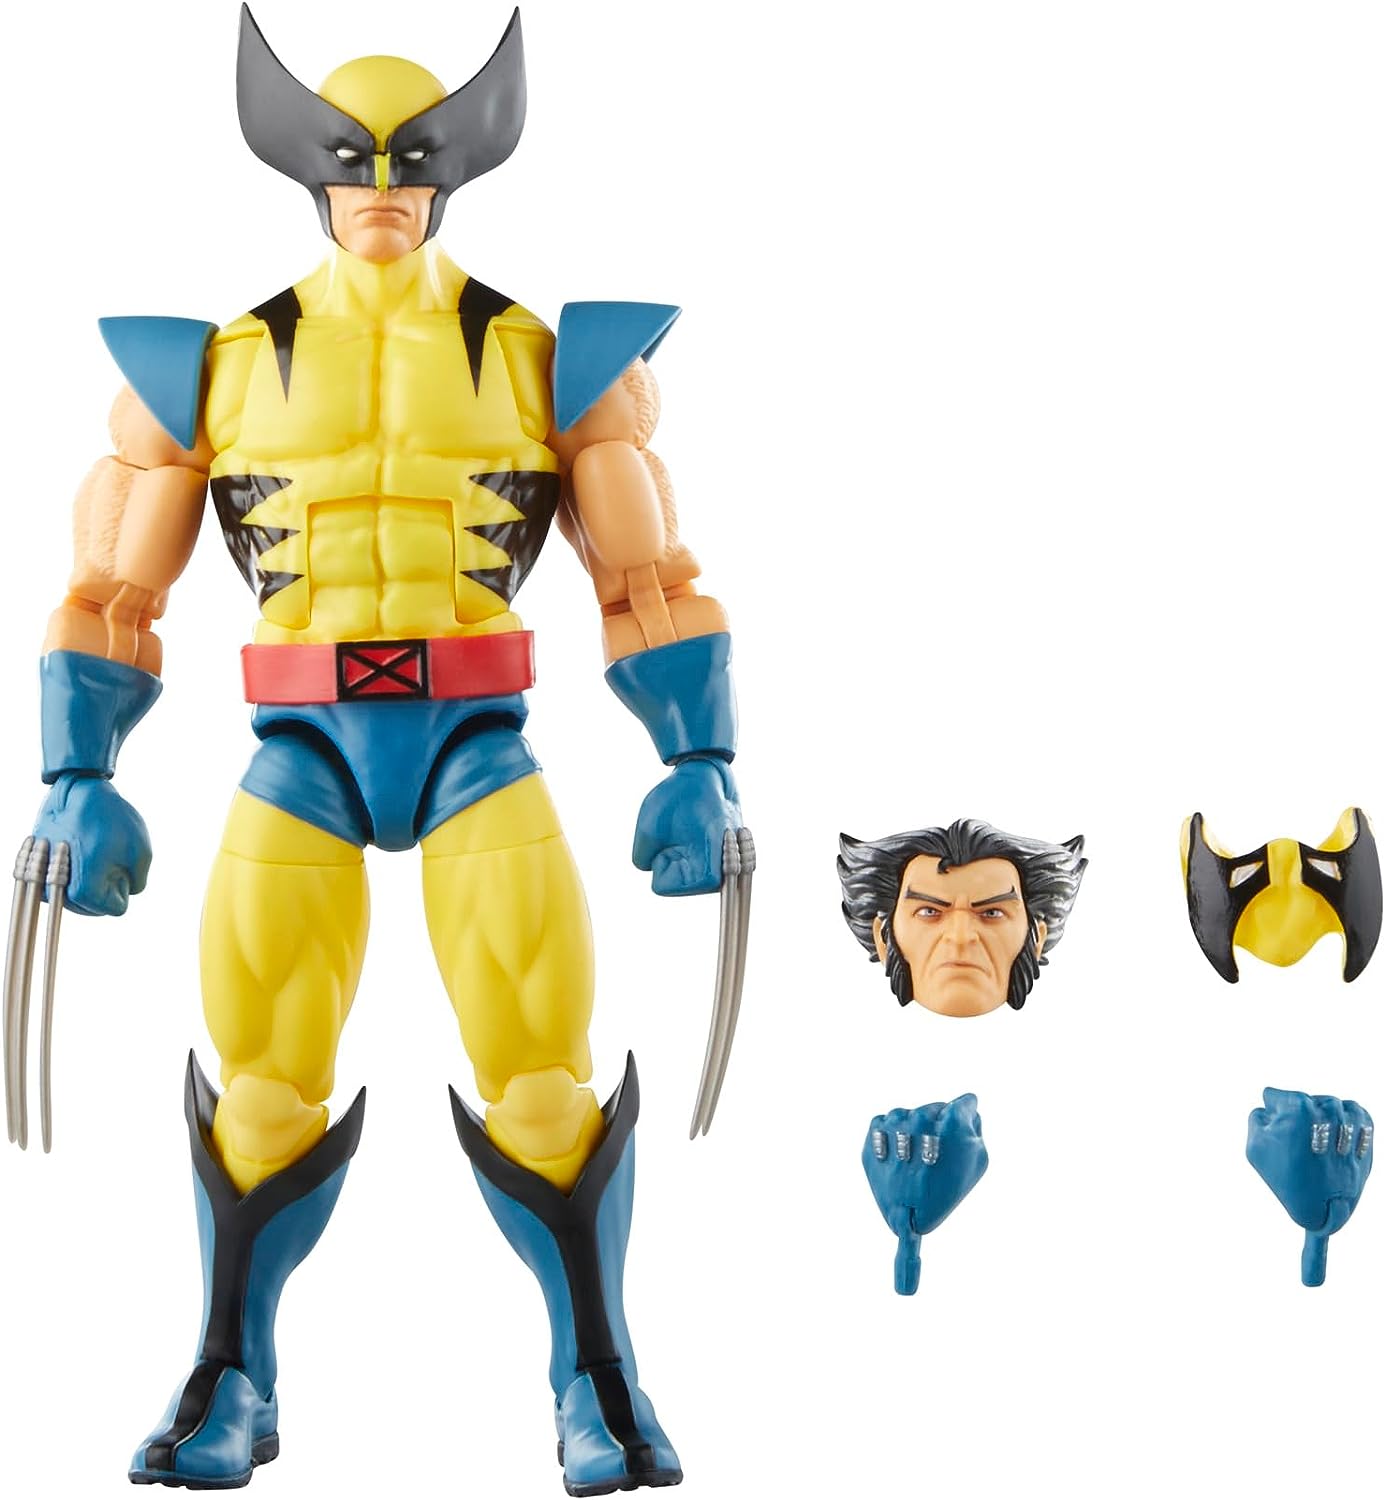 Marvel Legends Retro Cardback X-Men '97 Wolverine 6-Inch Action Figure画像